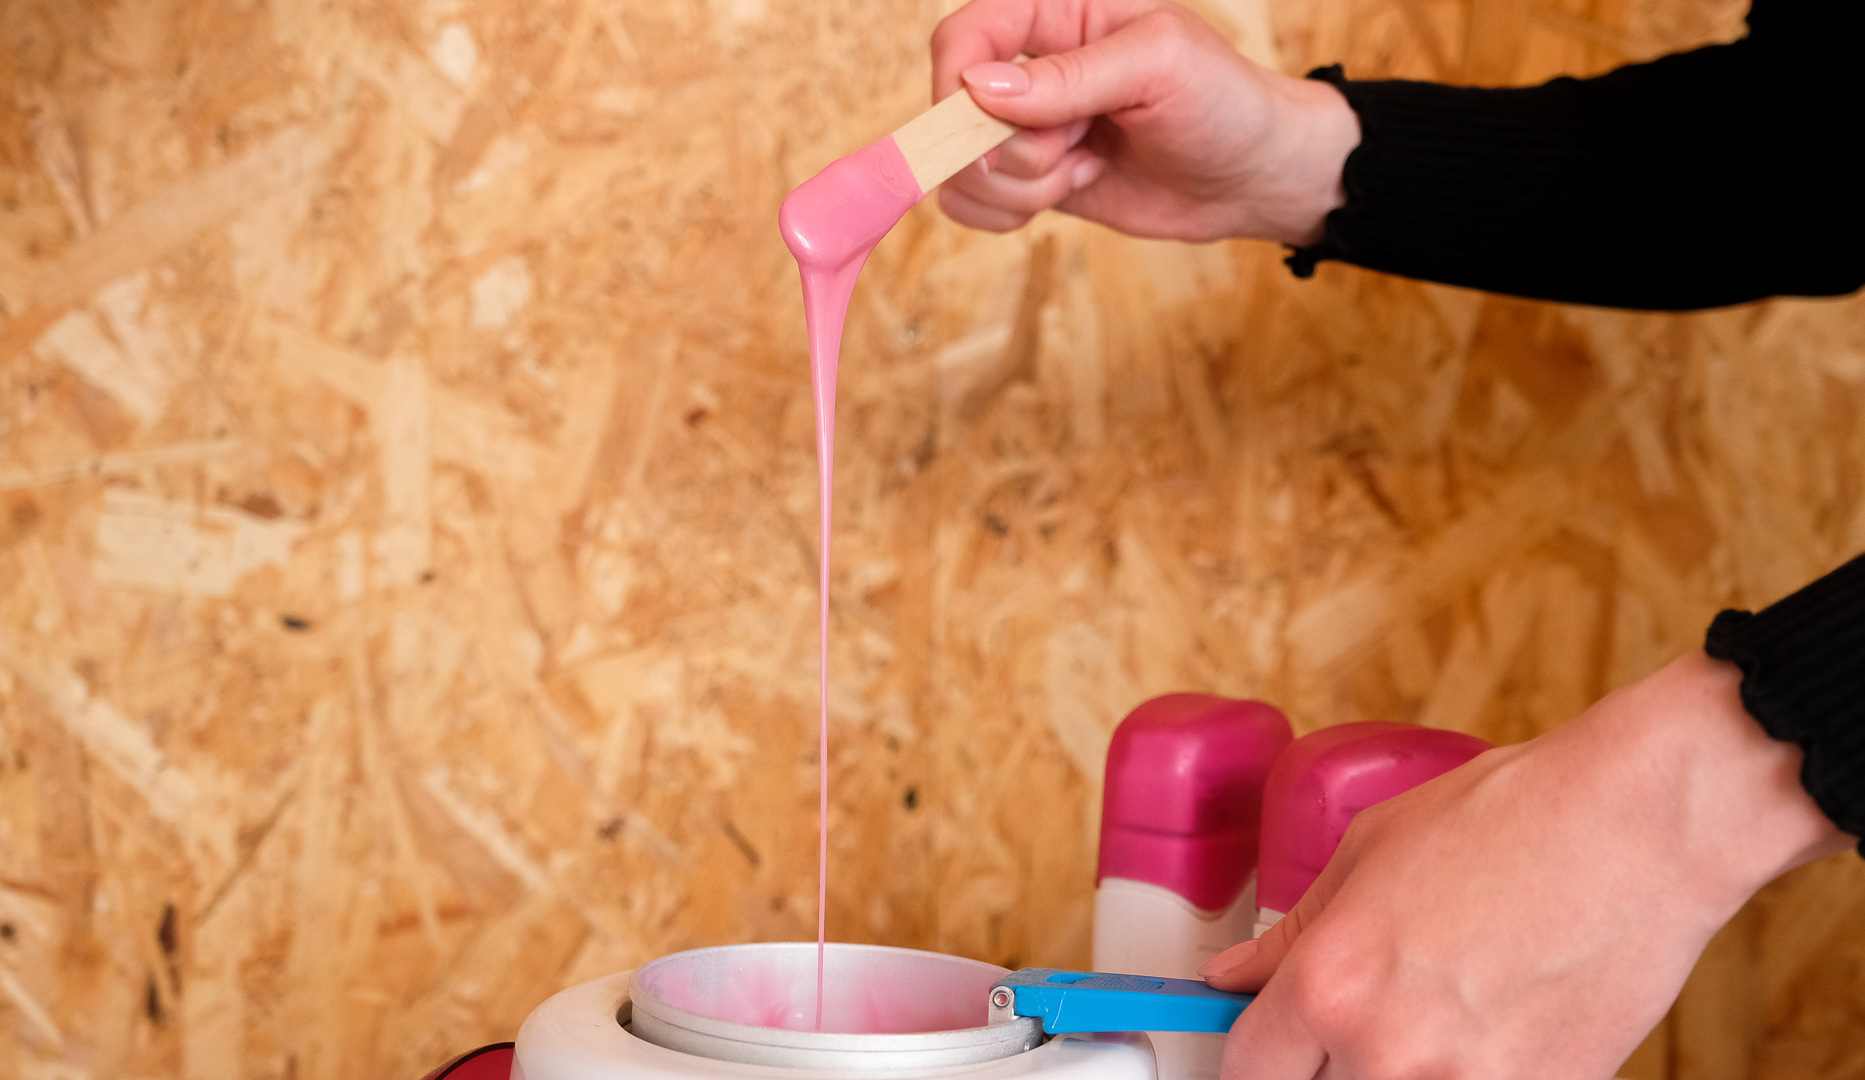 Lycon hot wax med farven lyserød